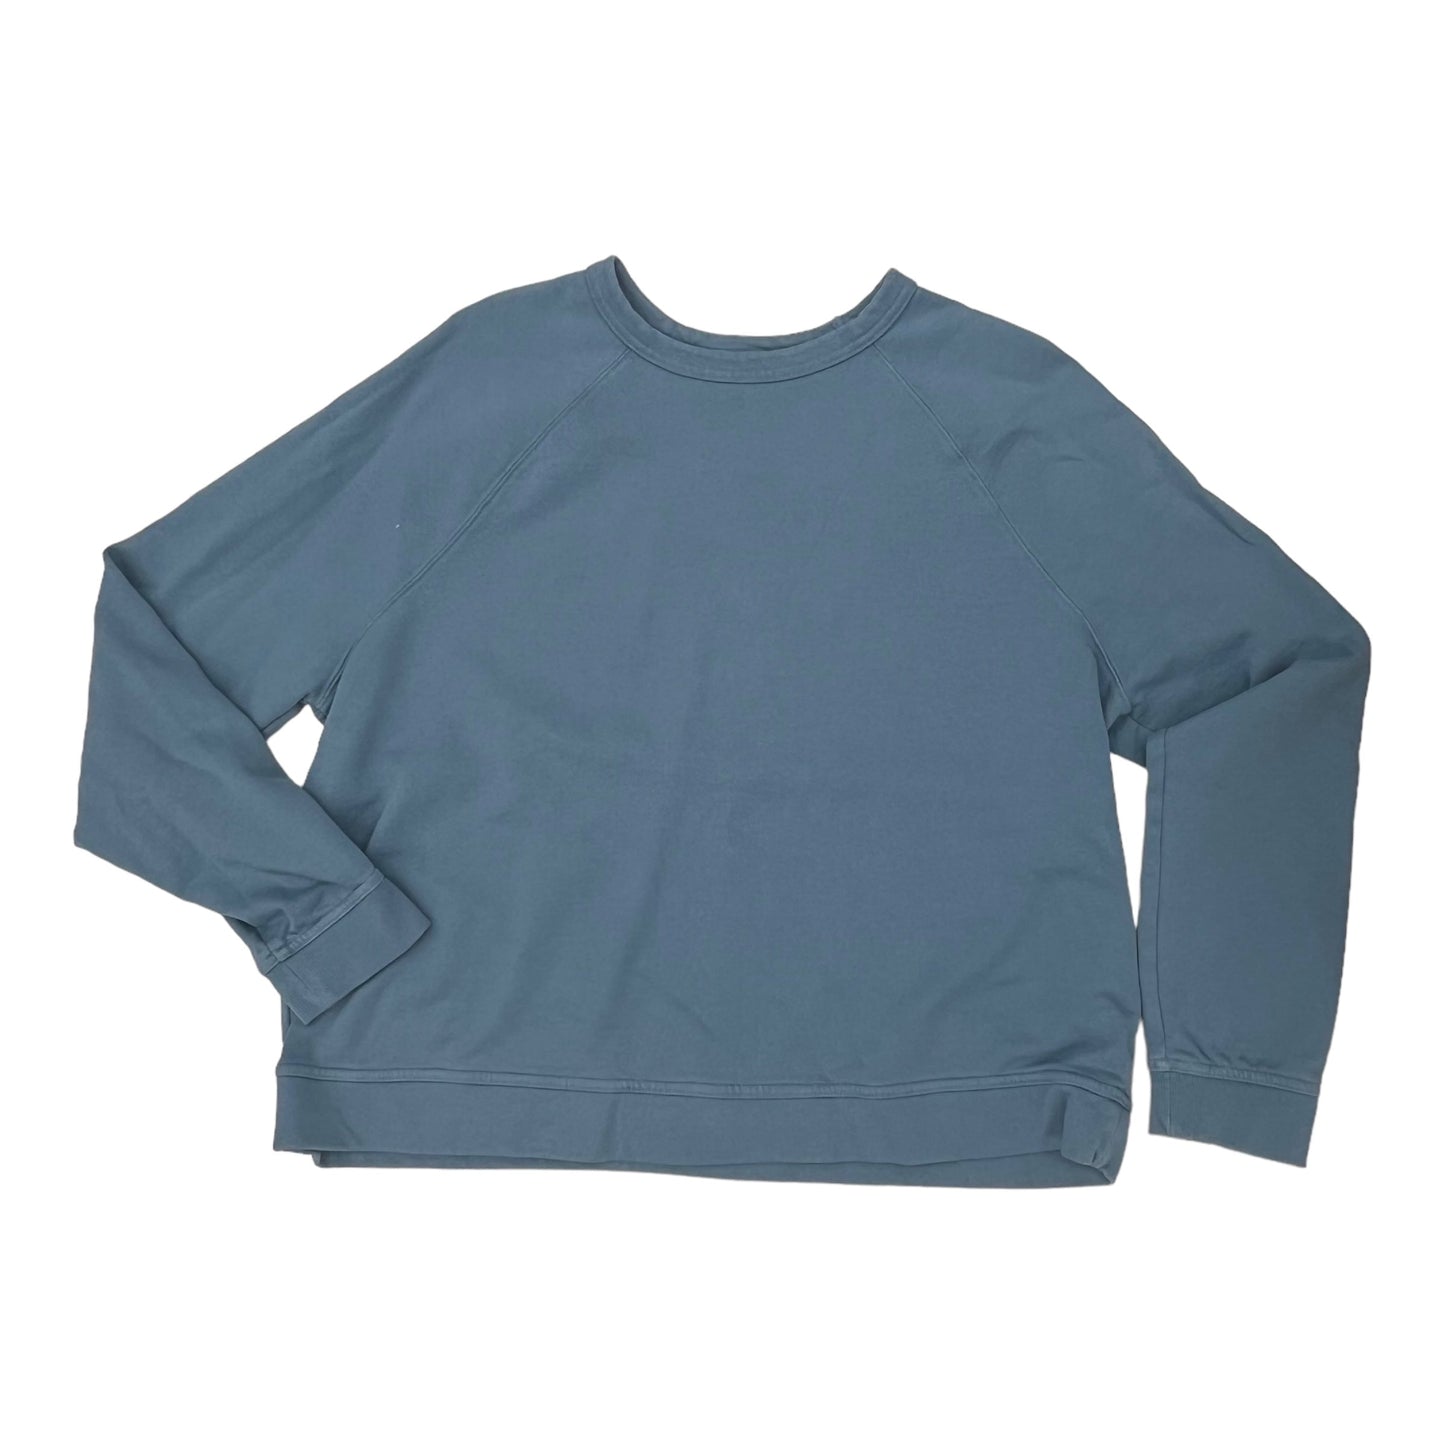 Sweatshirt Crewneck By Universal Thread  Size: Xl